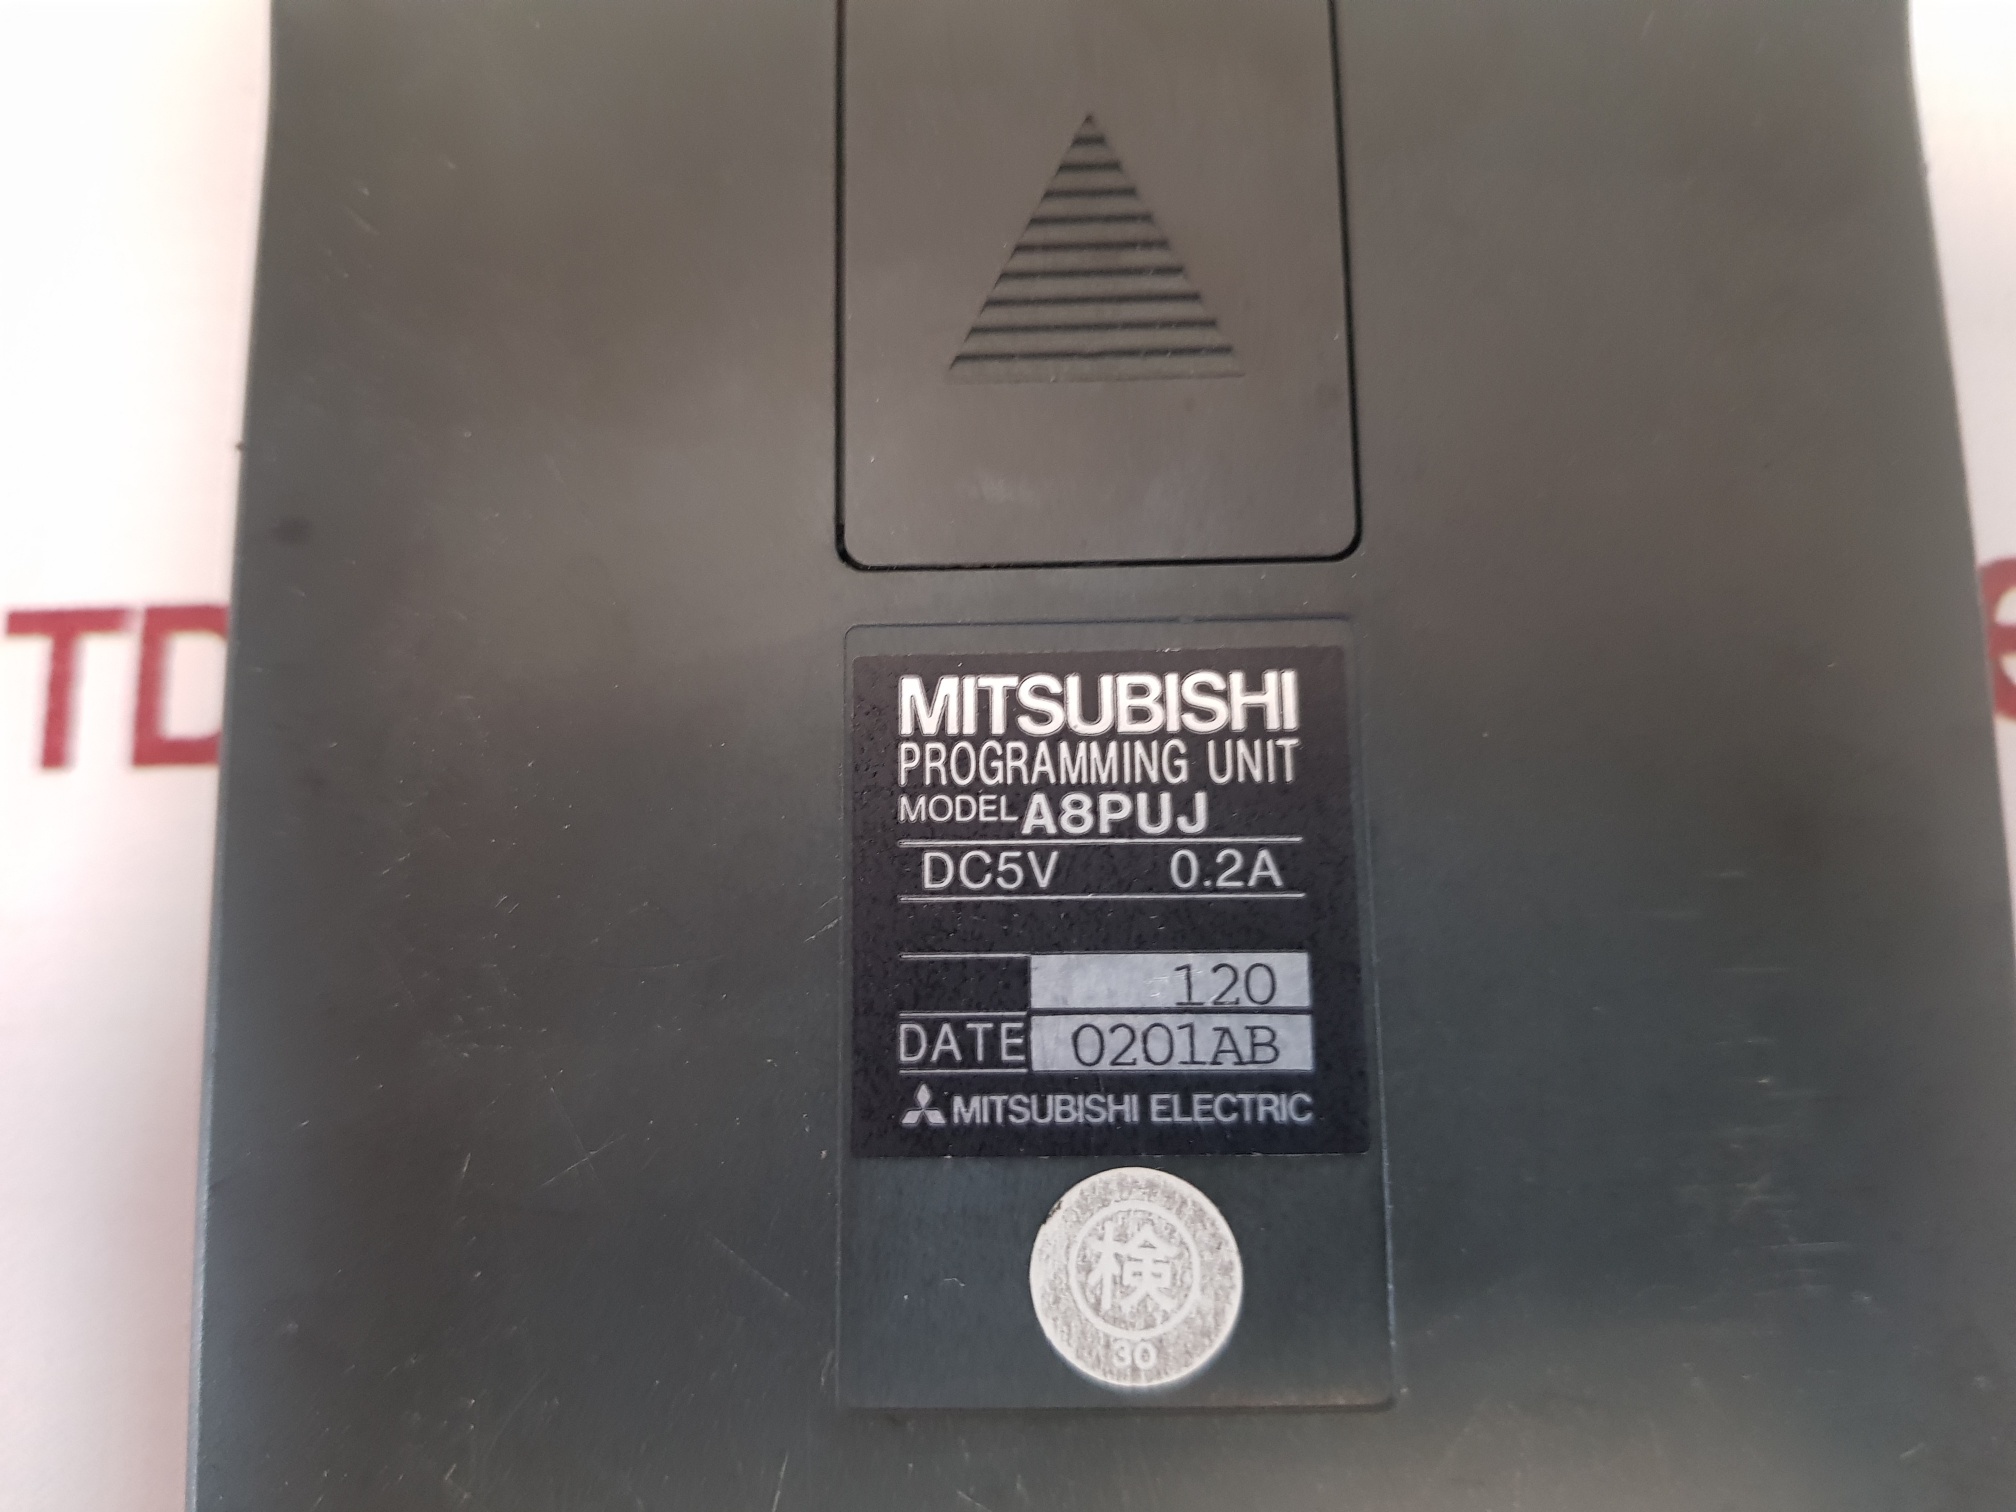 MITSUBISHI ELECTRIC A8PUJ PROGRAMMING UNIT